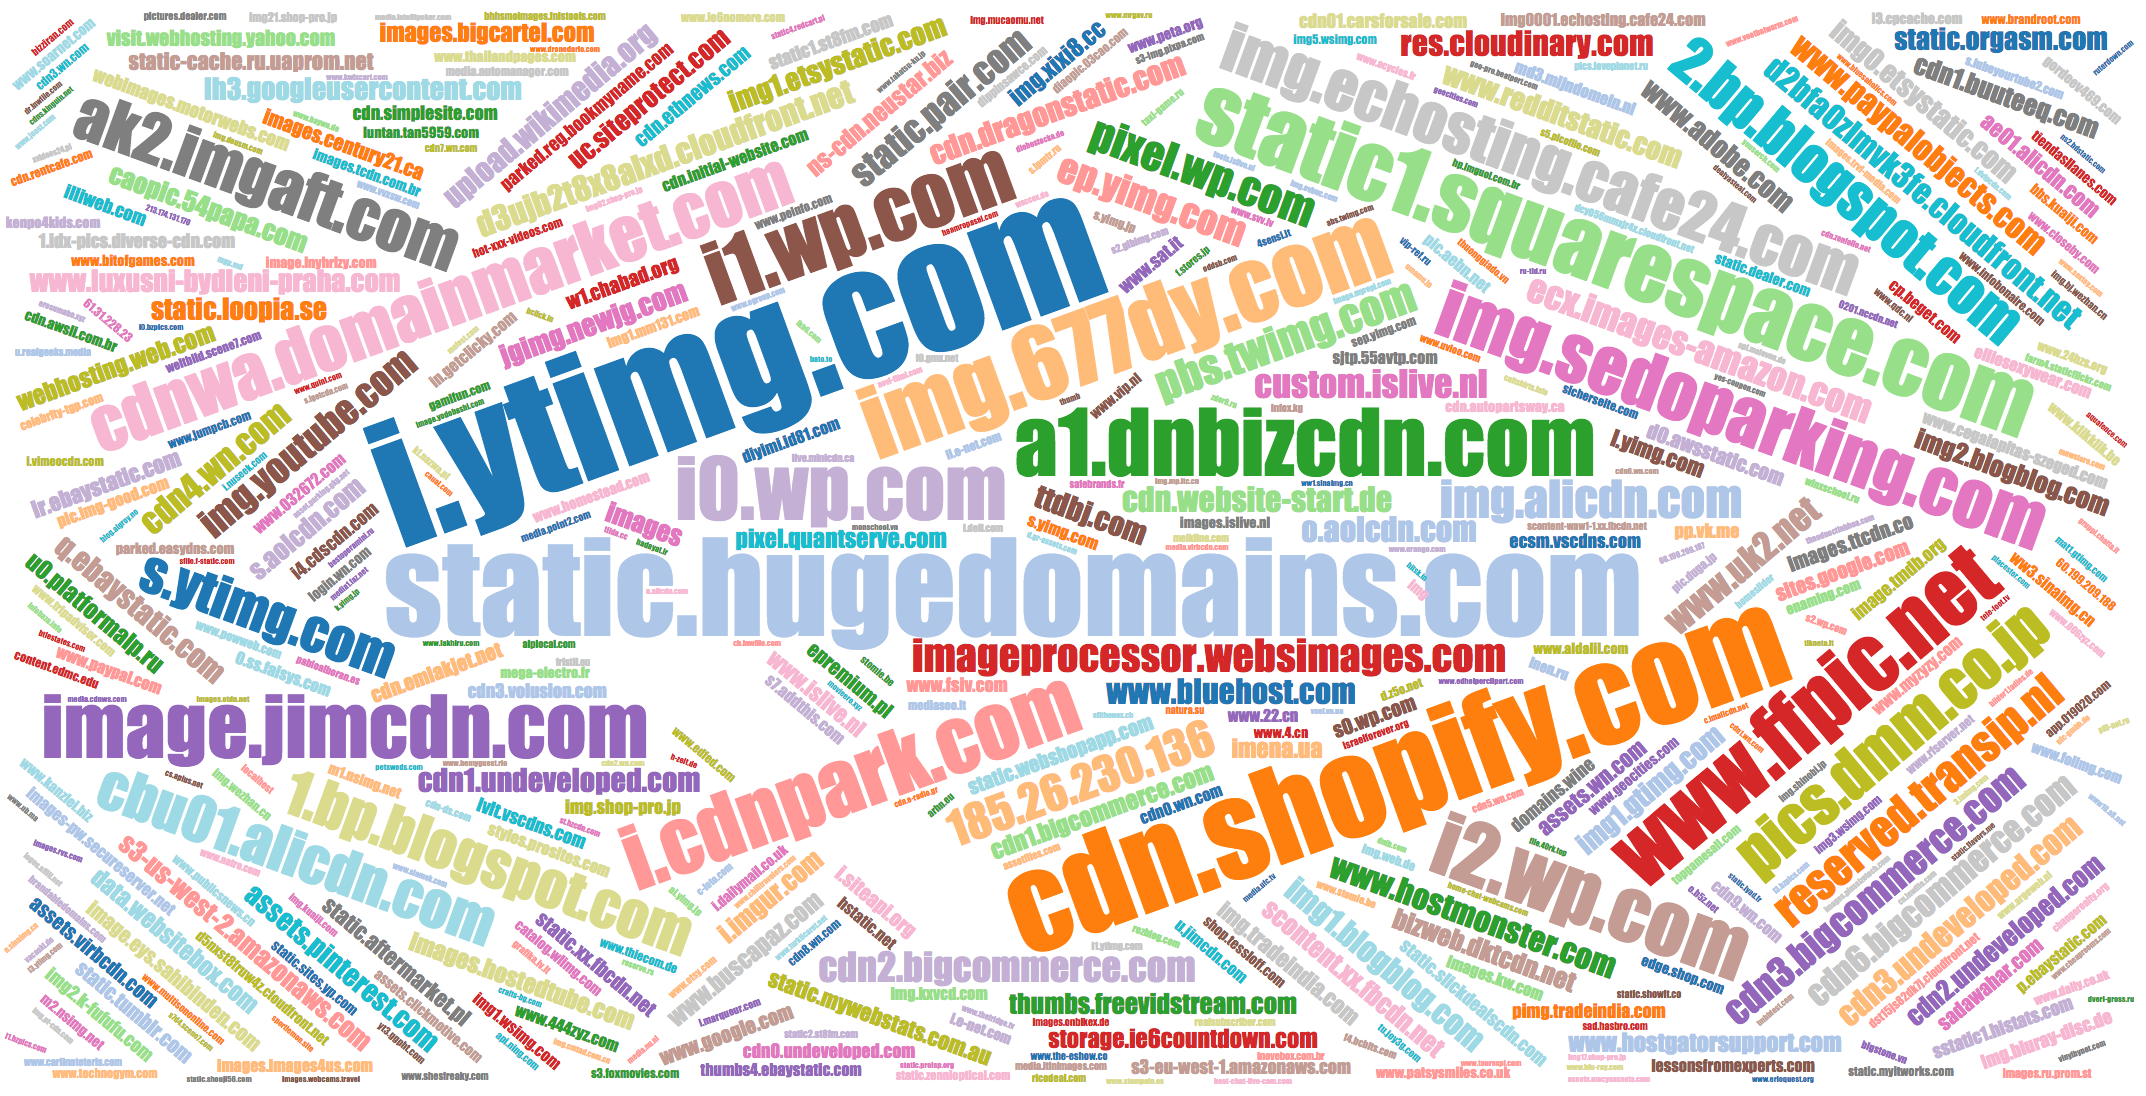 Popular names of IMG domains facebook.com, f4.bcbits.com, etc.